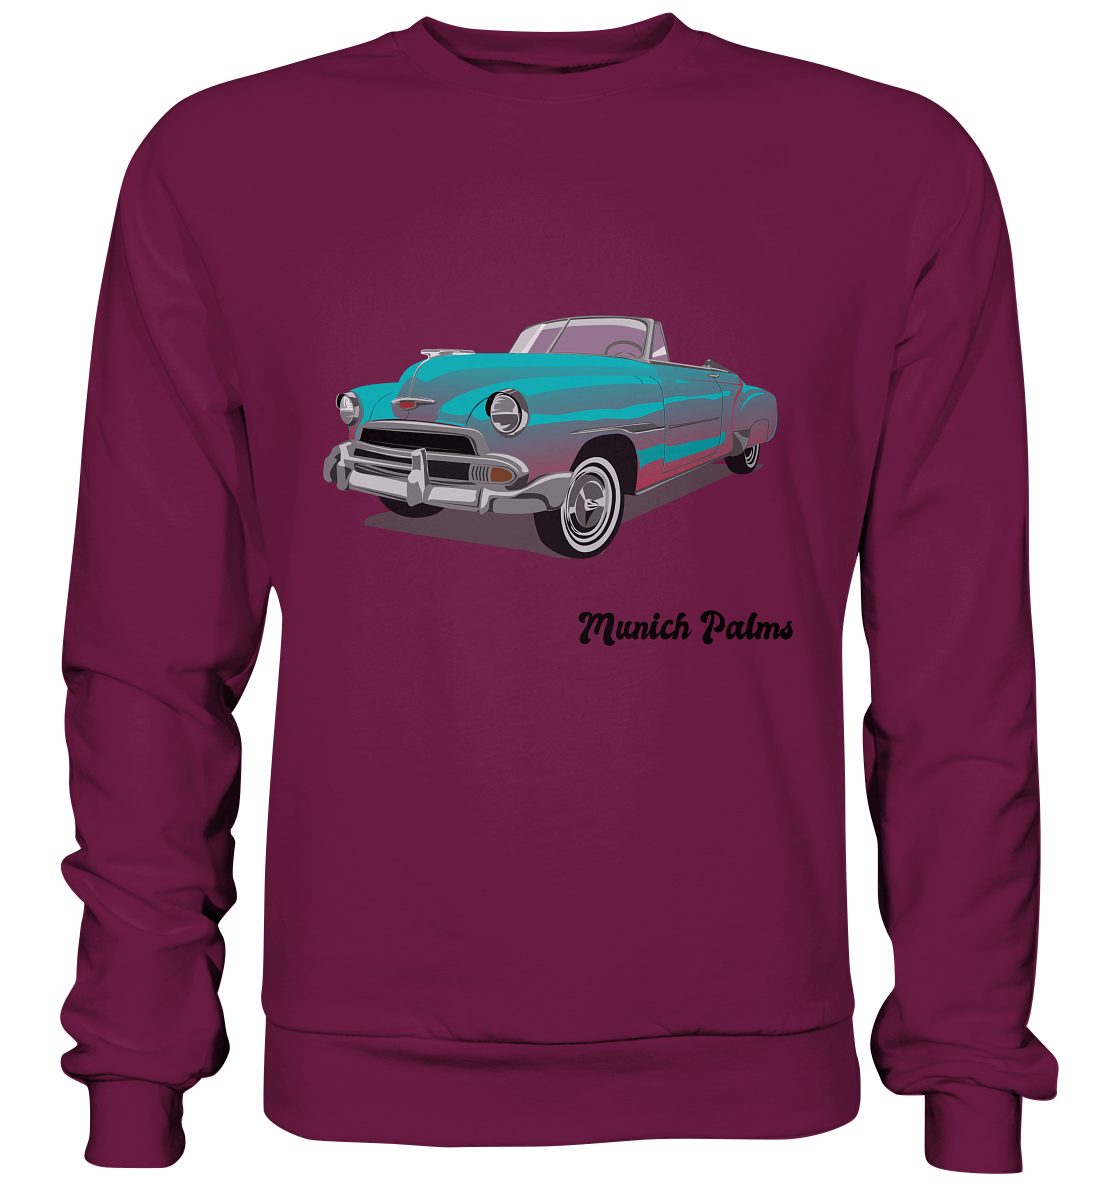 Fleetline Retro Classic Car Oldtimer, Car, Convertible by Munich Palms - Premium Sweatshirt